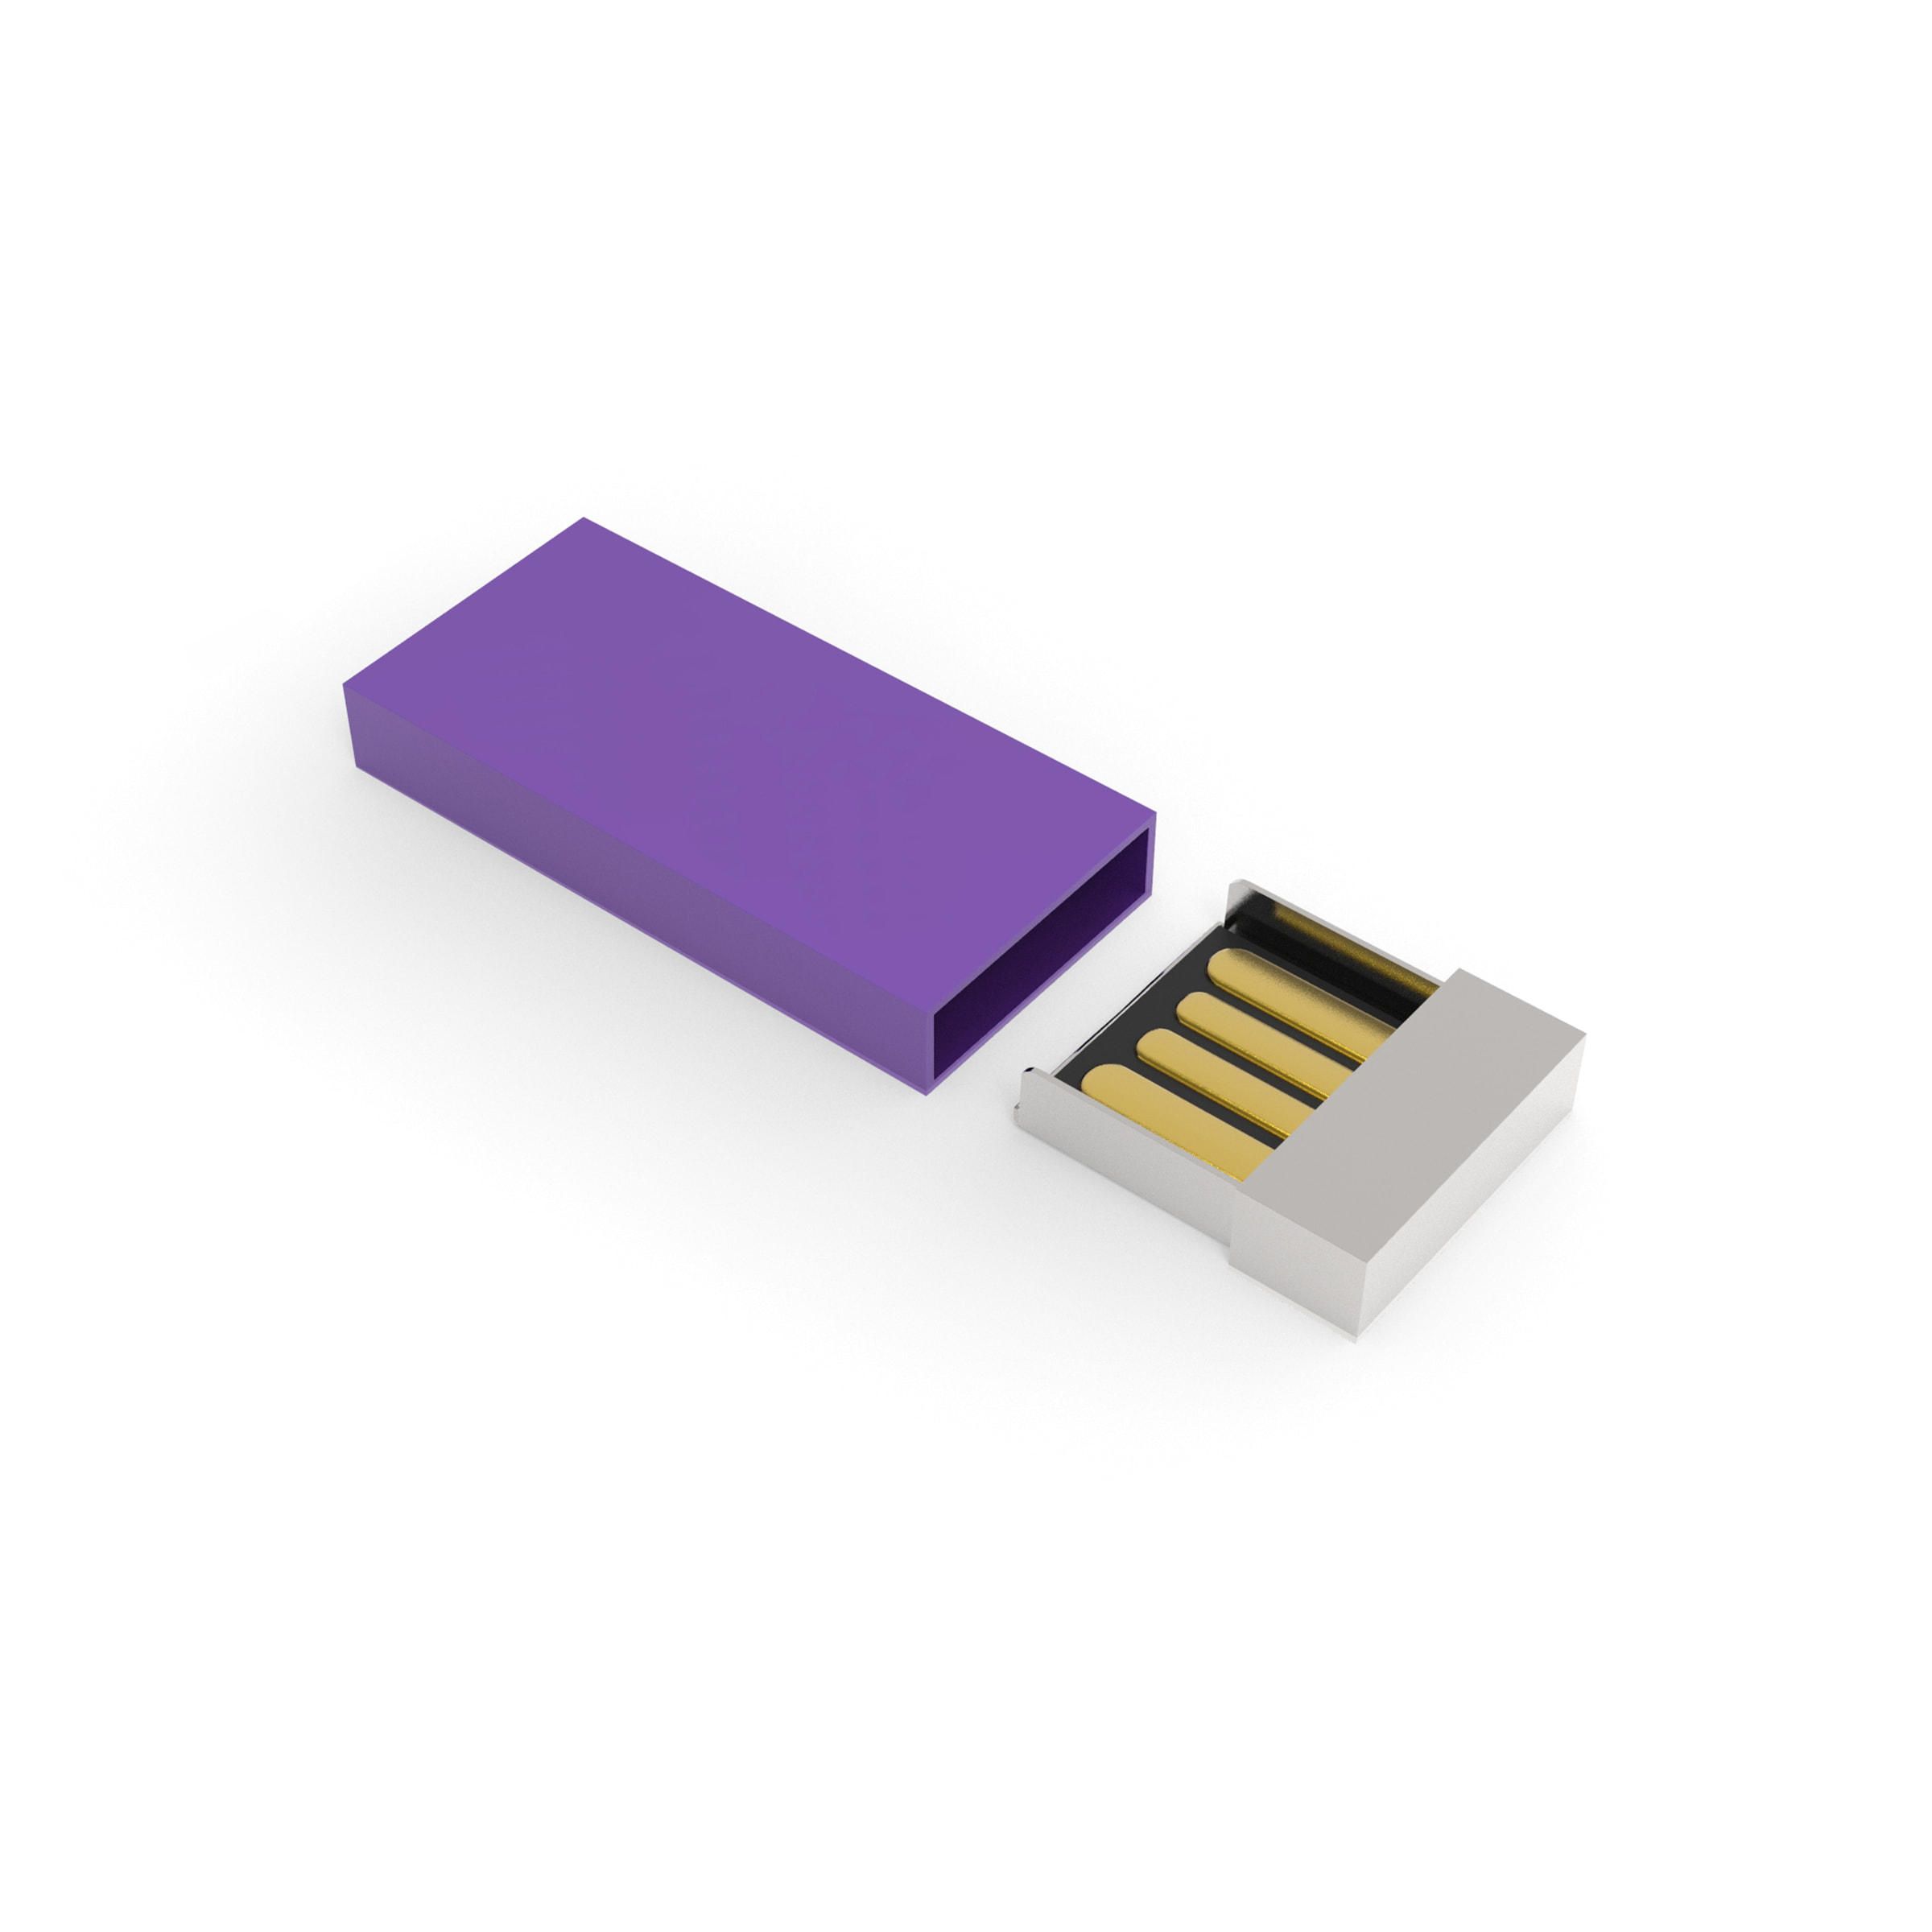 File name: Milan-purple-nologo.jpg
Dimensions: 2400 x 2400 pixels
File size: 119.66 KB